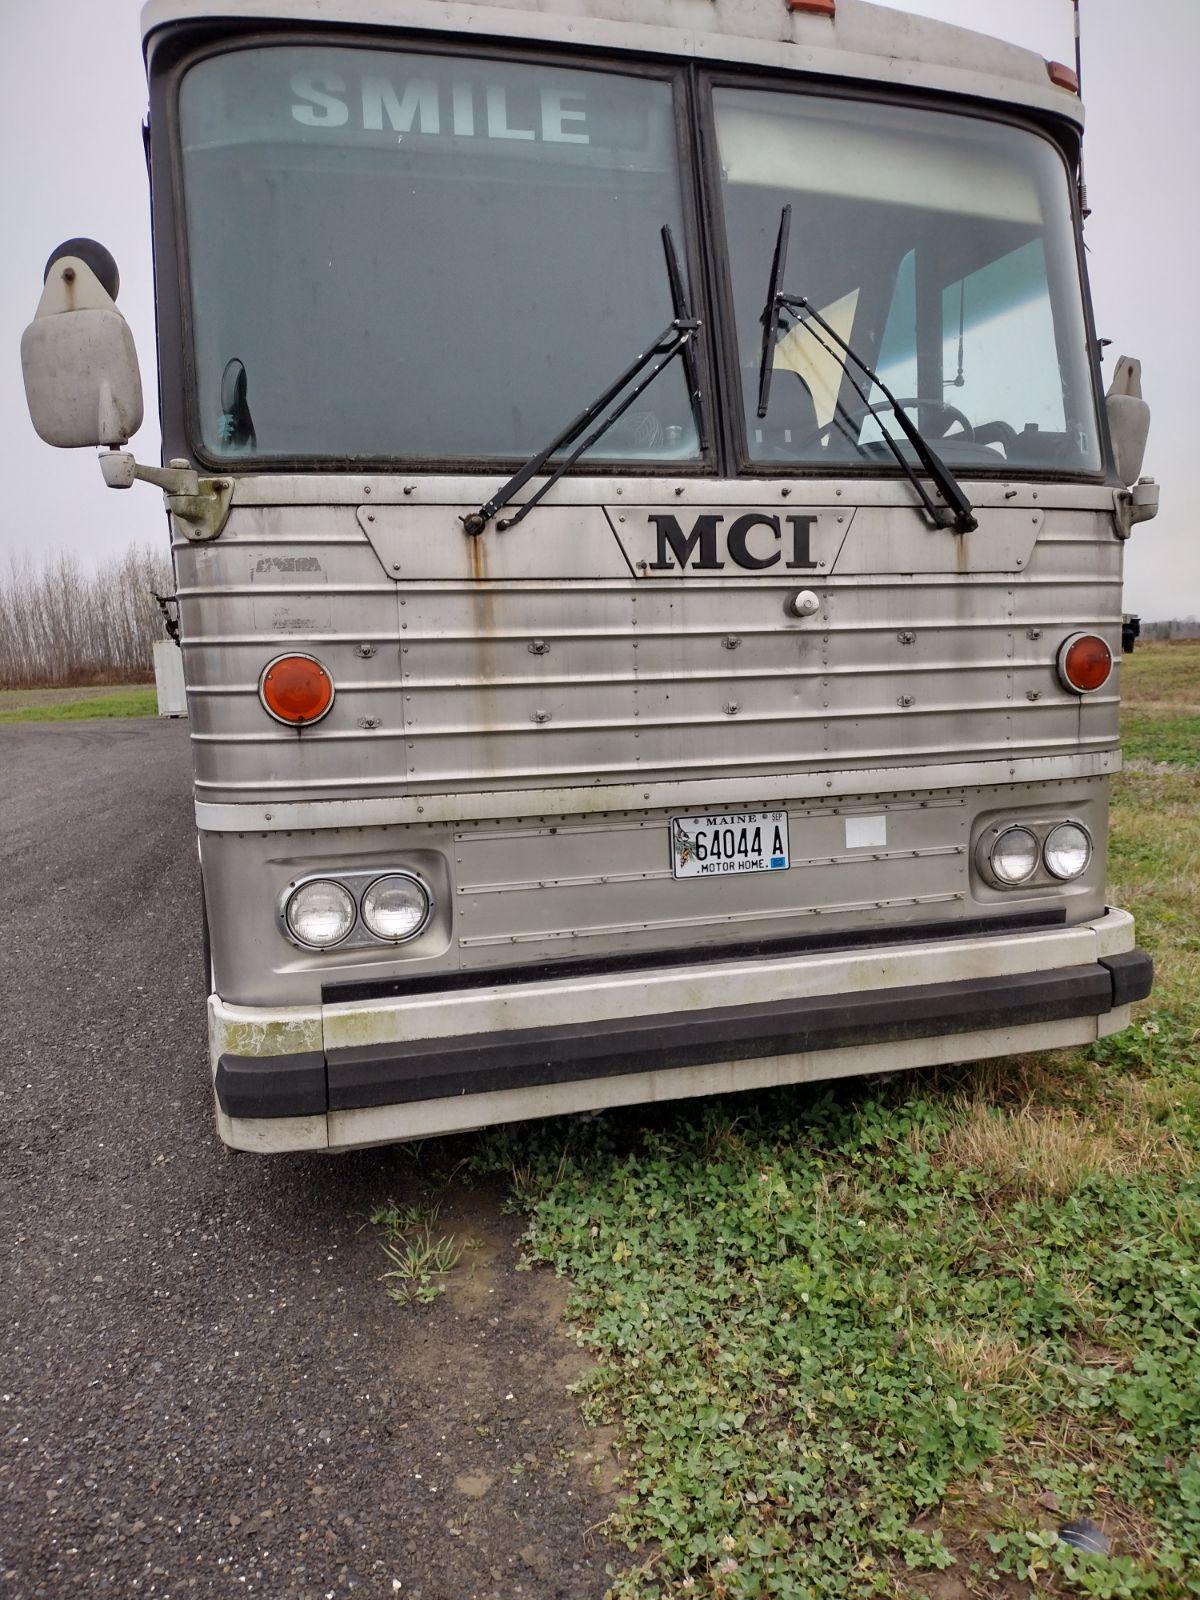 1977 MCI-MC8 converted Bus